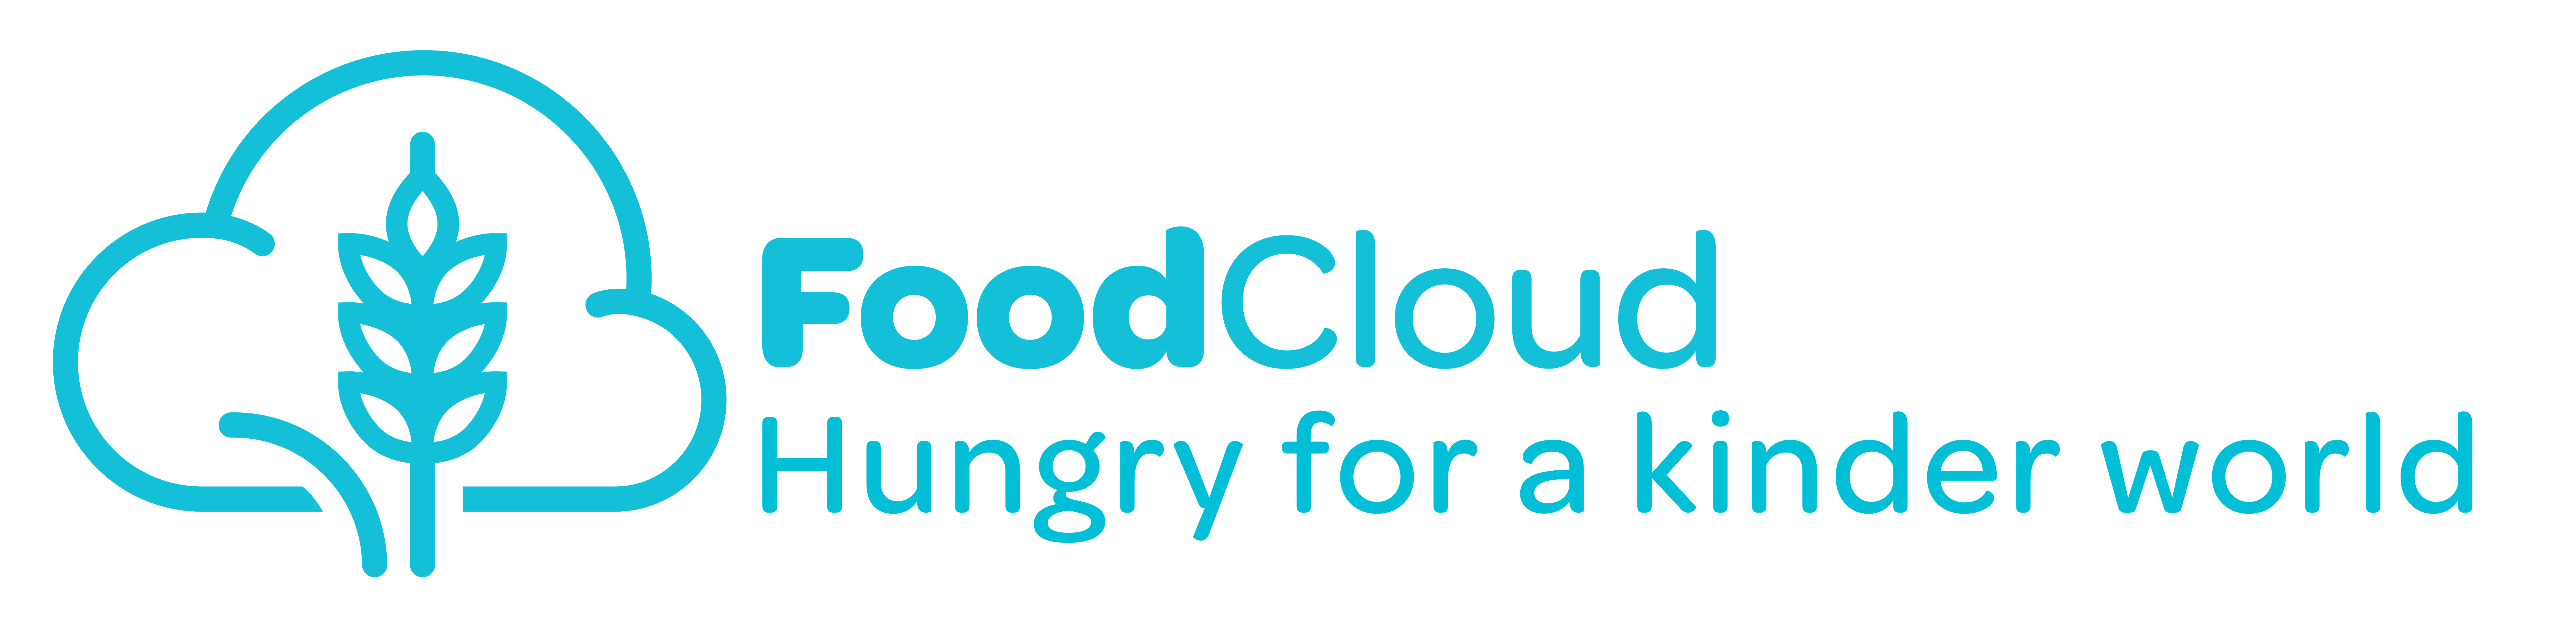 Food Cloud logo